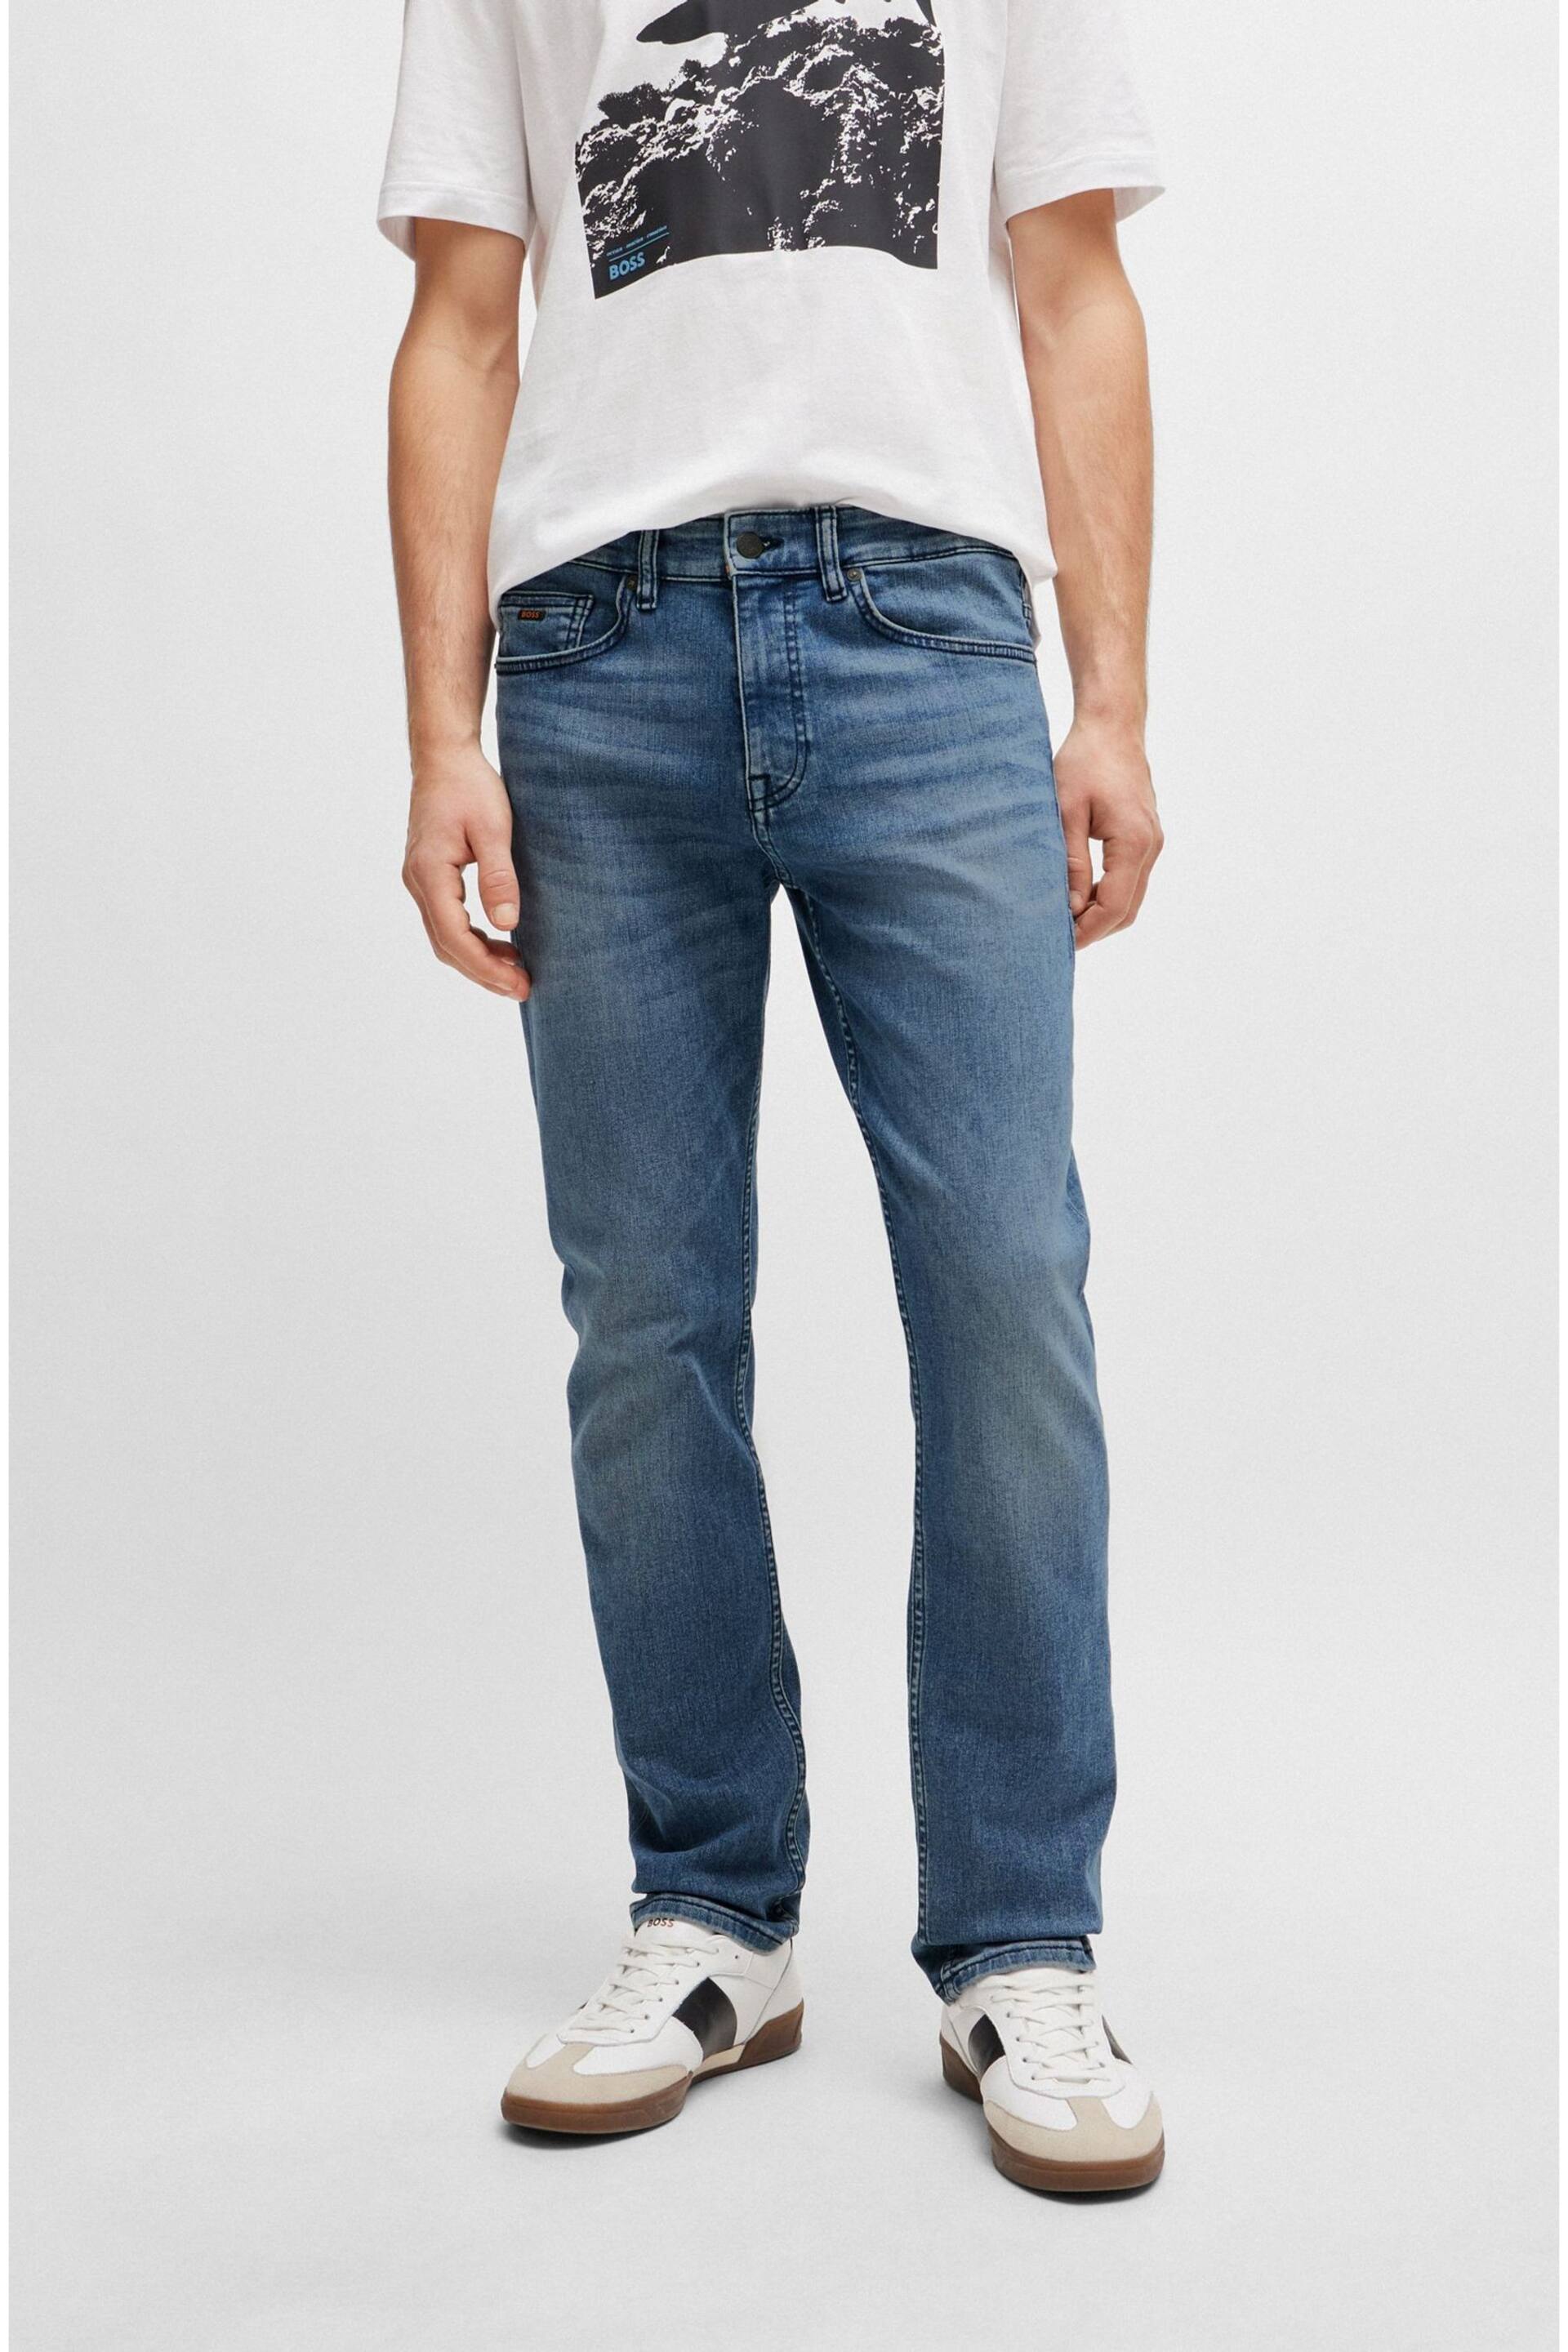 BOSS Blue Slim Fit Comfort Stretch Denim Jeans - Image 1 of 5